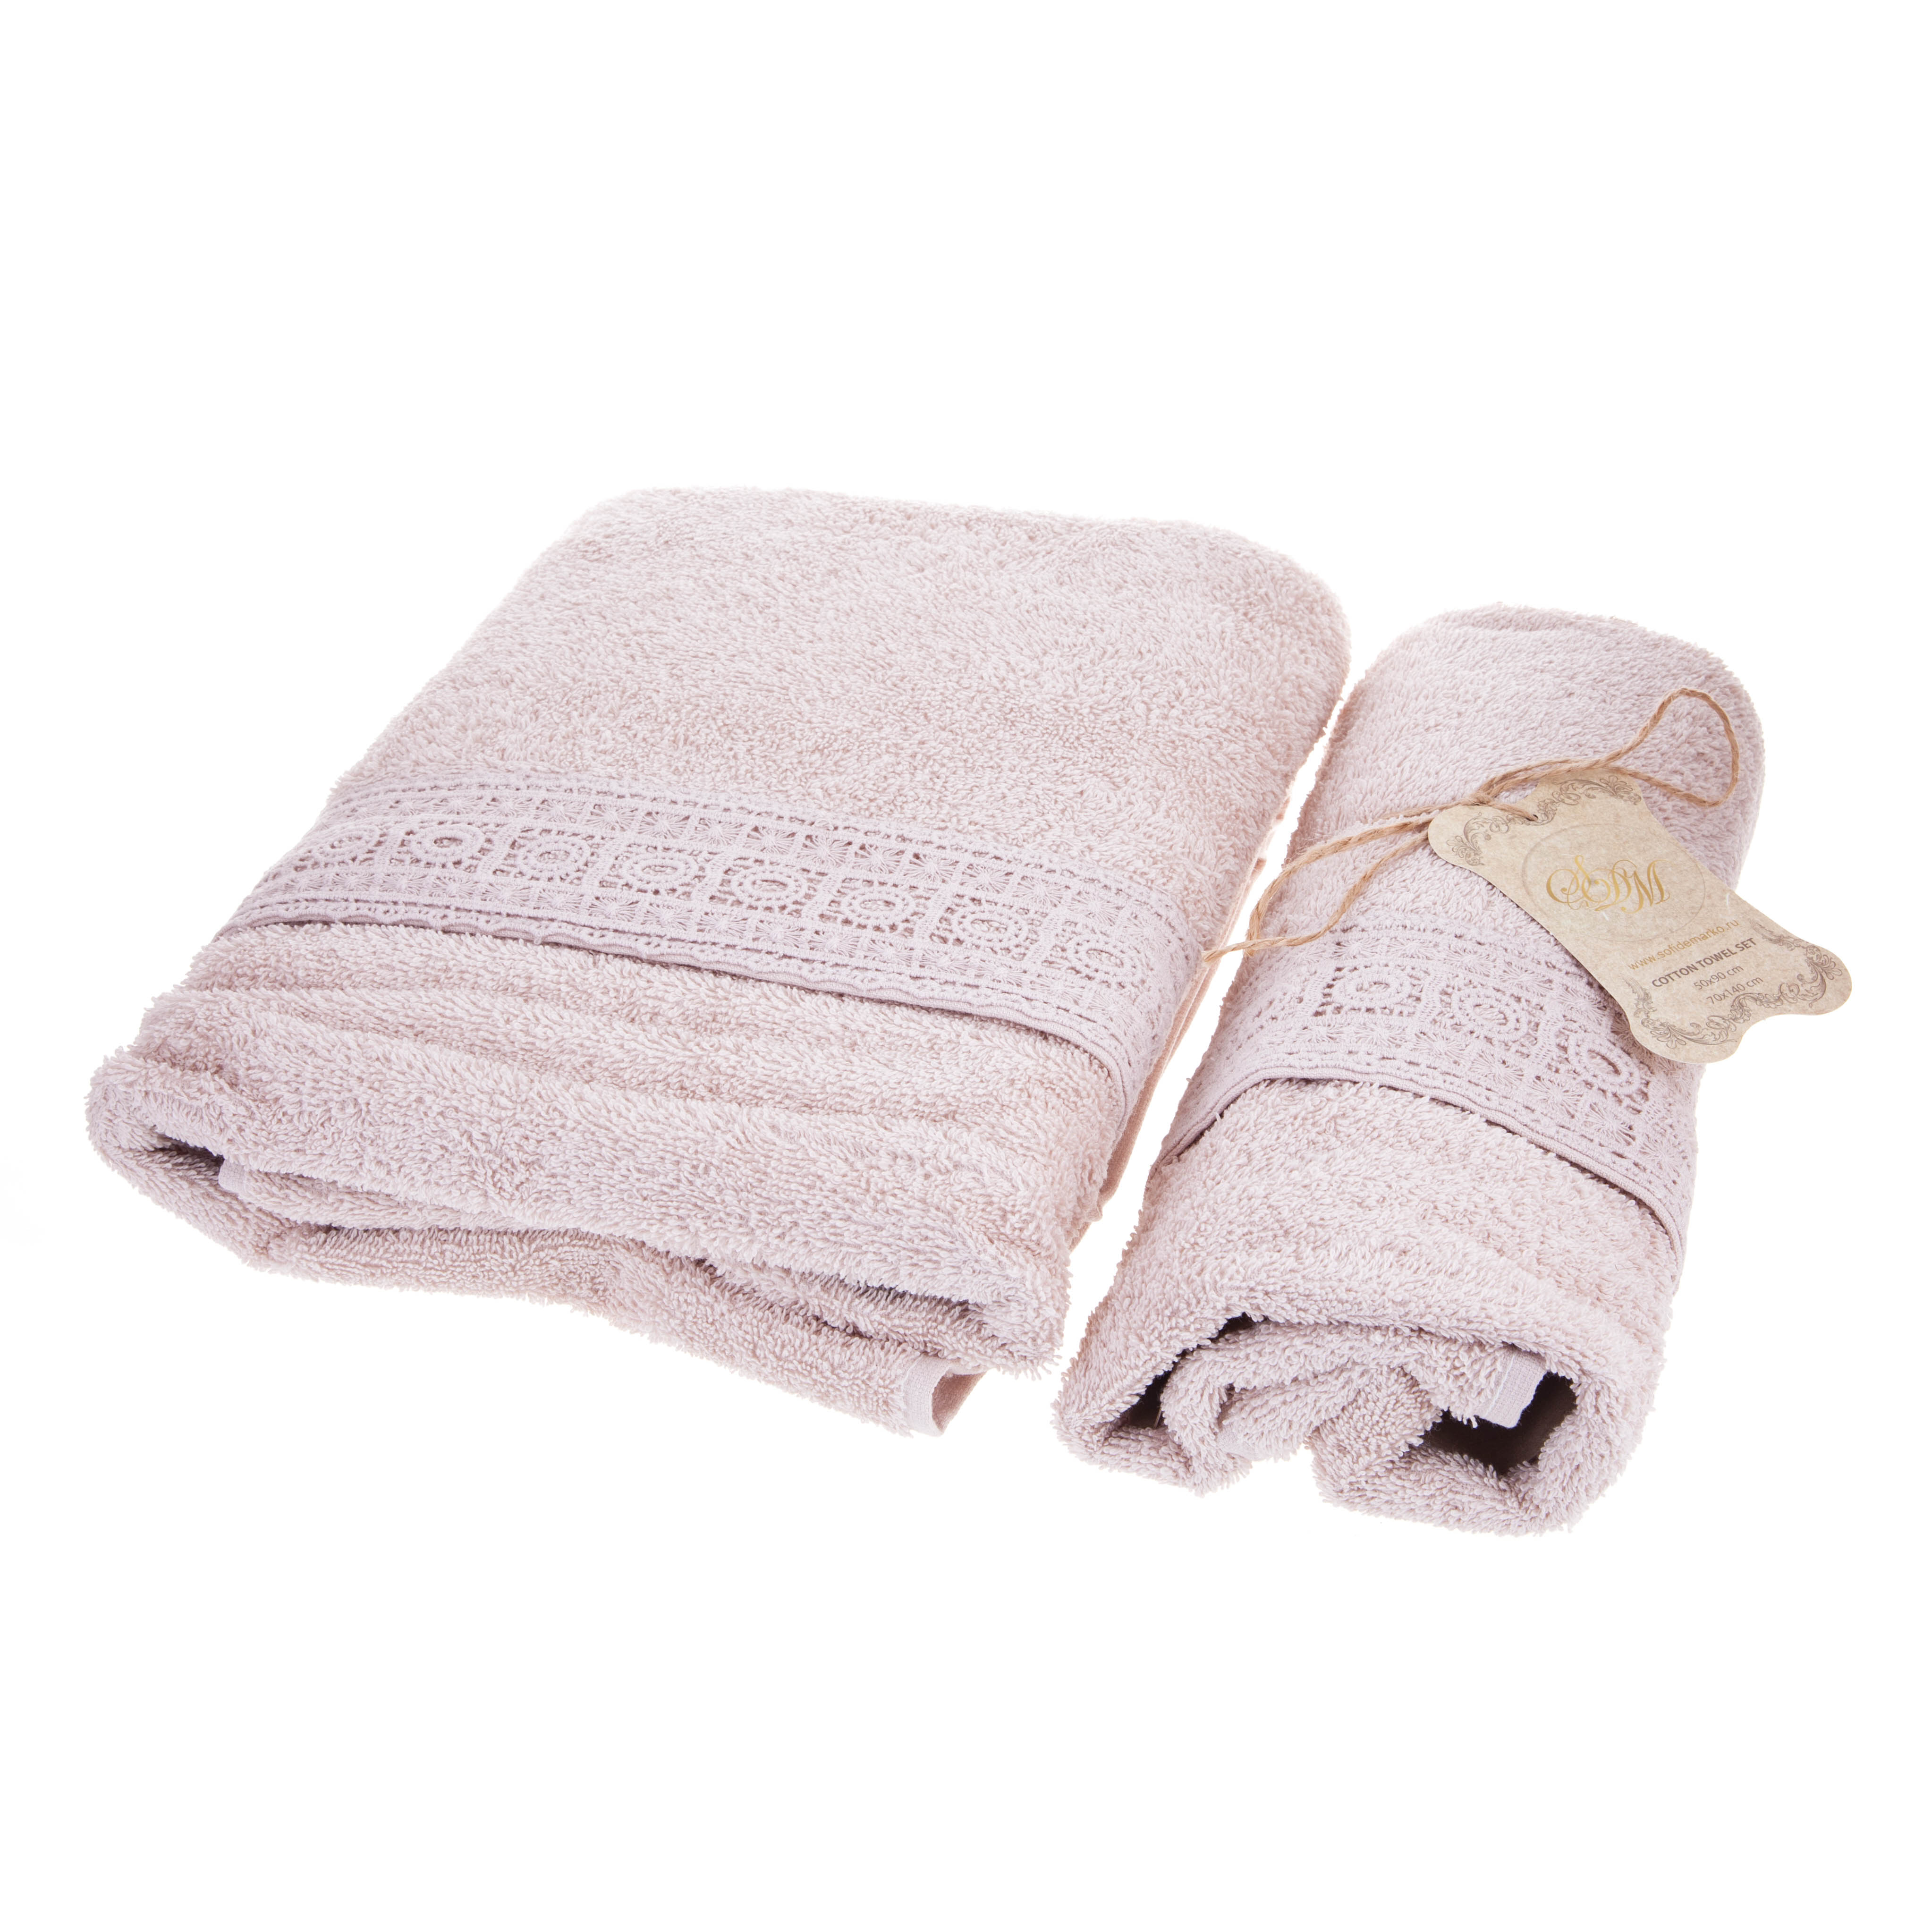 Полотенца с вышивкой katia Sofi de marko S.070 полотенца